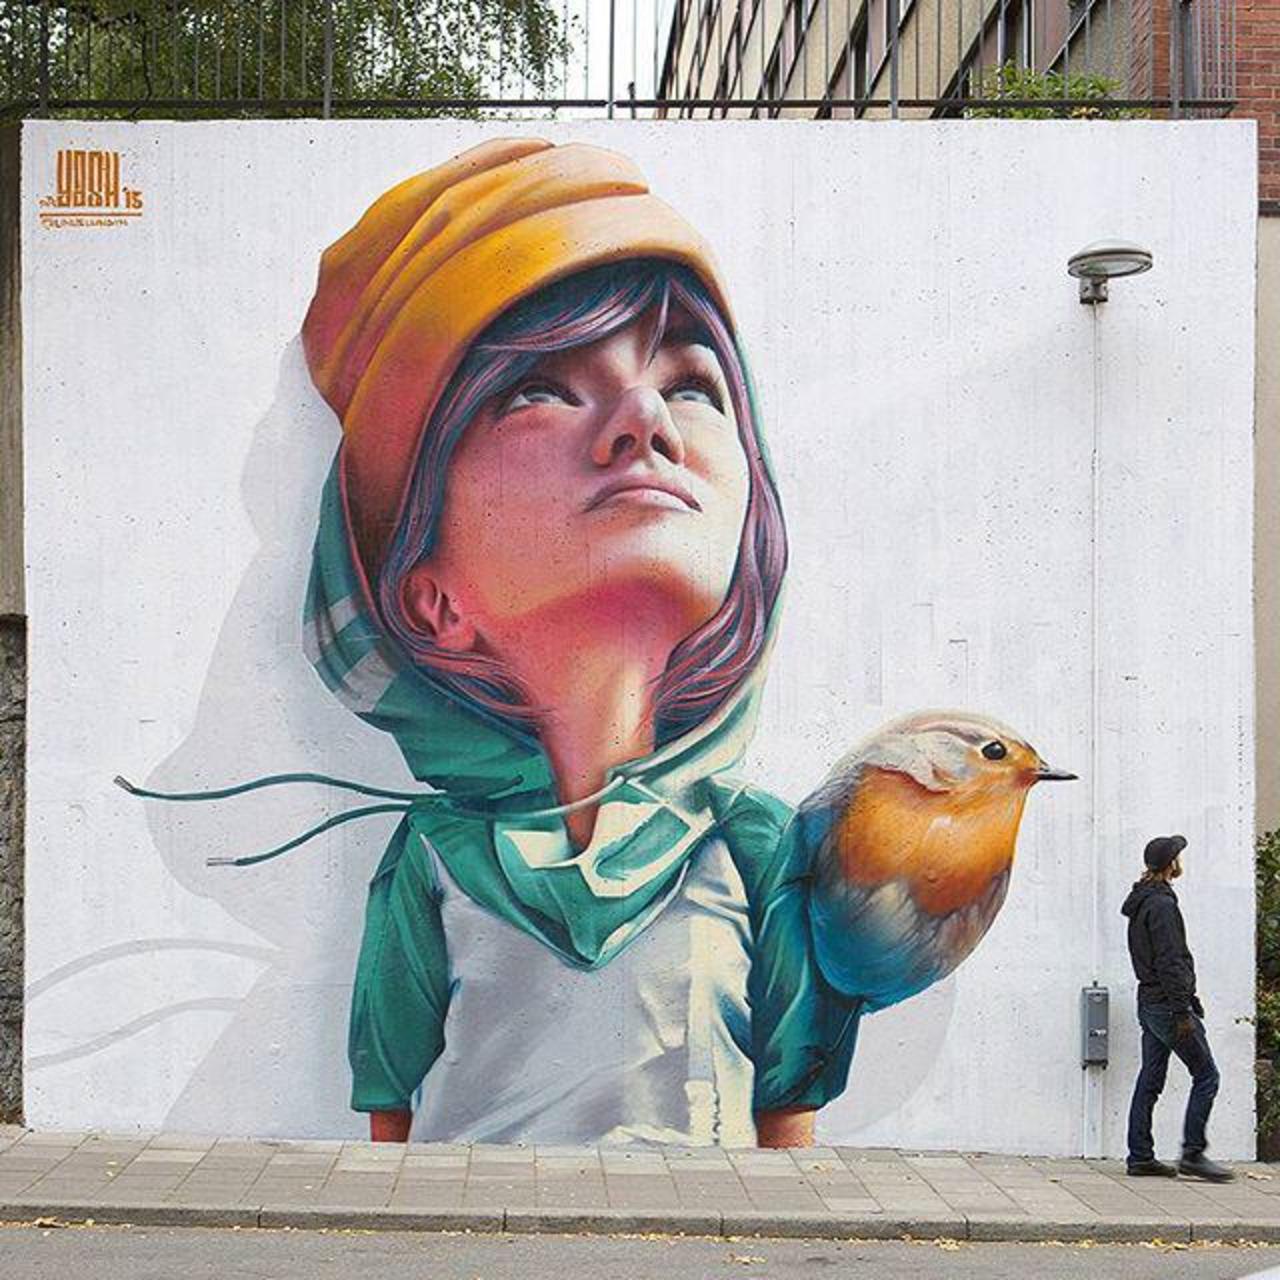 RT @cakozlem76: Yash #streetart #urbanart #graffiti #BigArtBoost #Art http://t.co/rGtx0qNwXQ